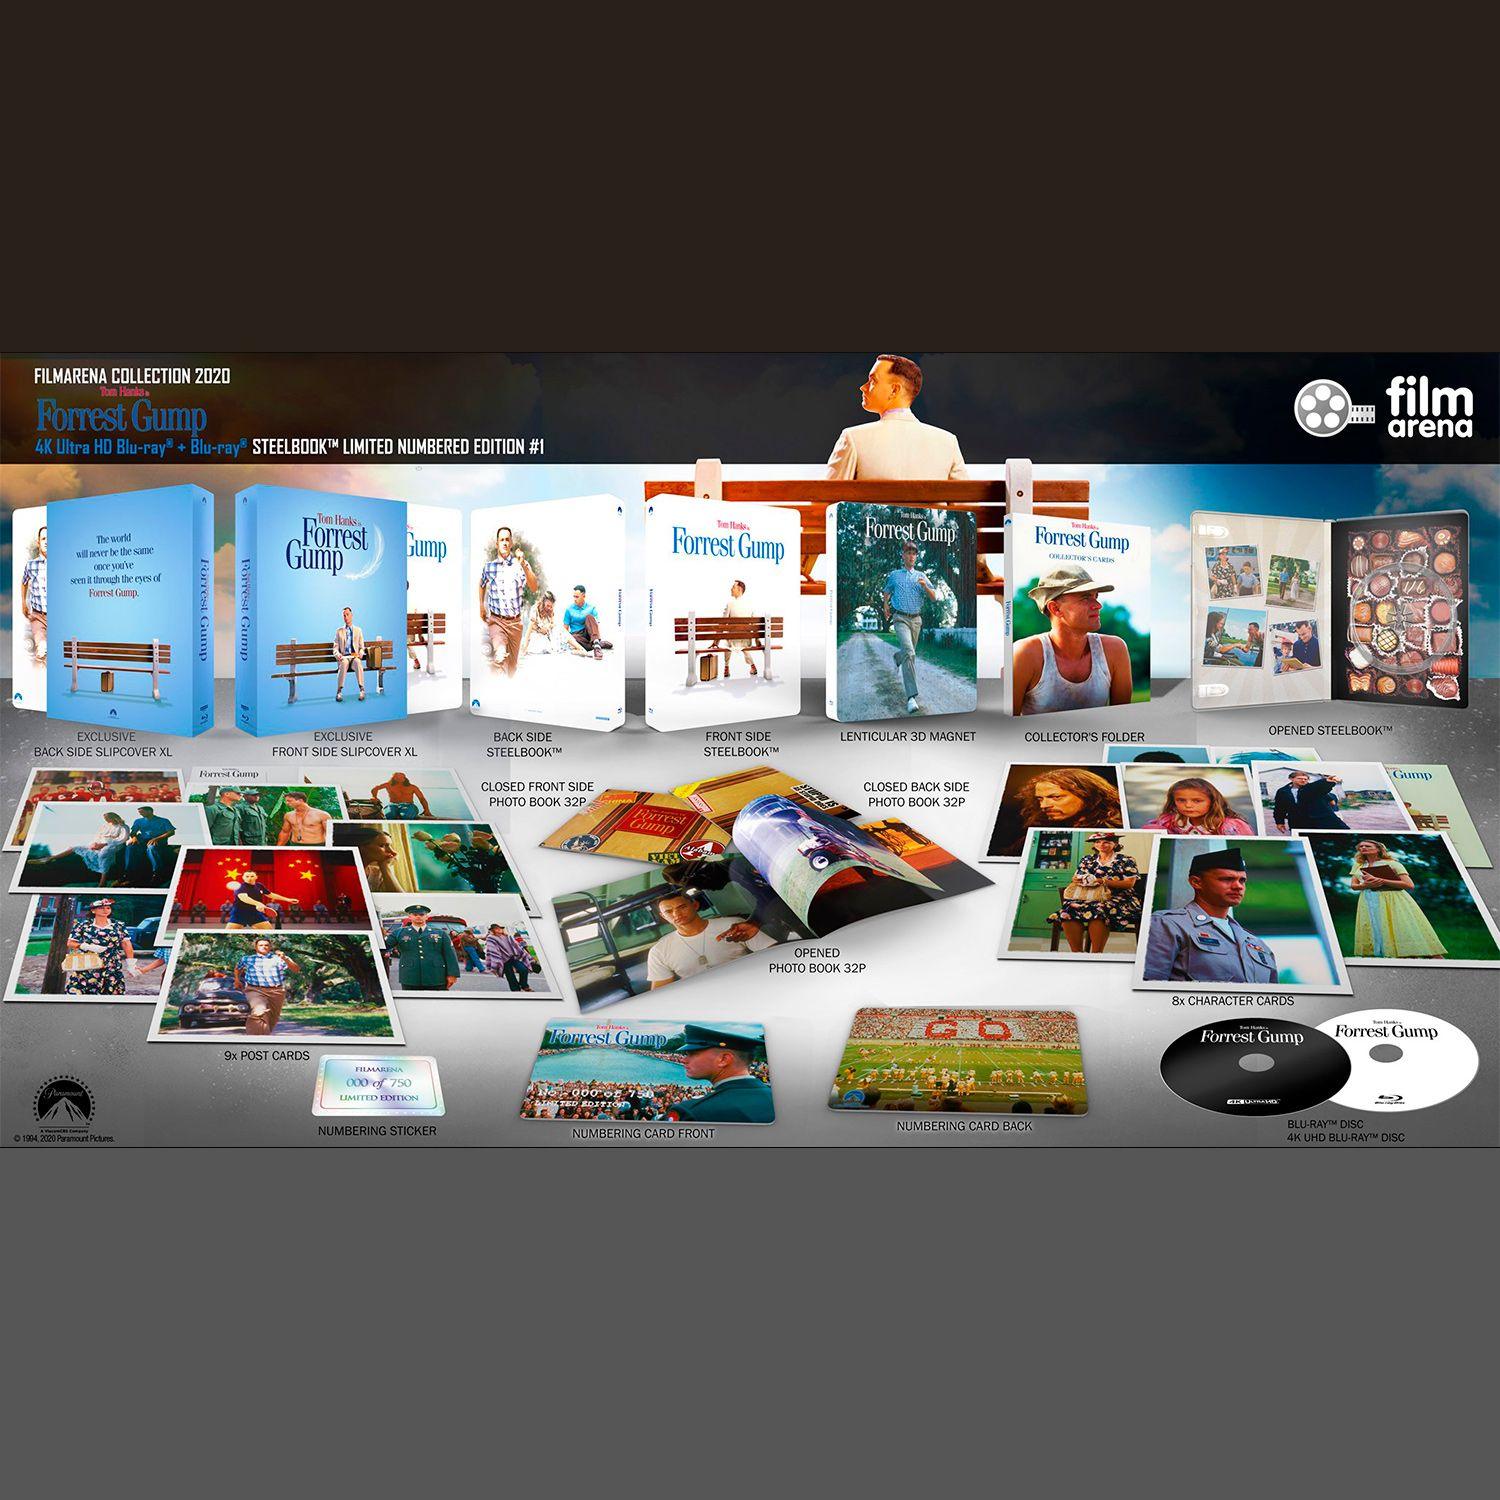 Форрест Гамп (4K UHD + Blu-ray) FilmArena Exclusive SteelBook / FAC #138 - FULLSLIP XL + Lenticular magnet EDITION #1